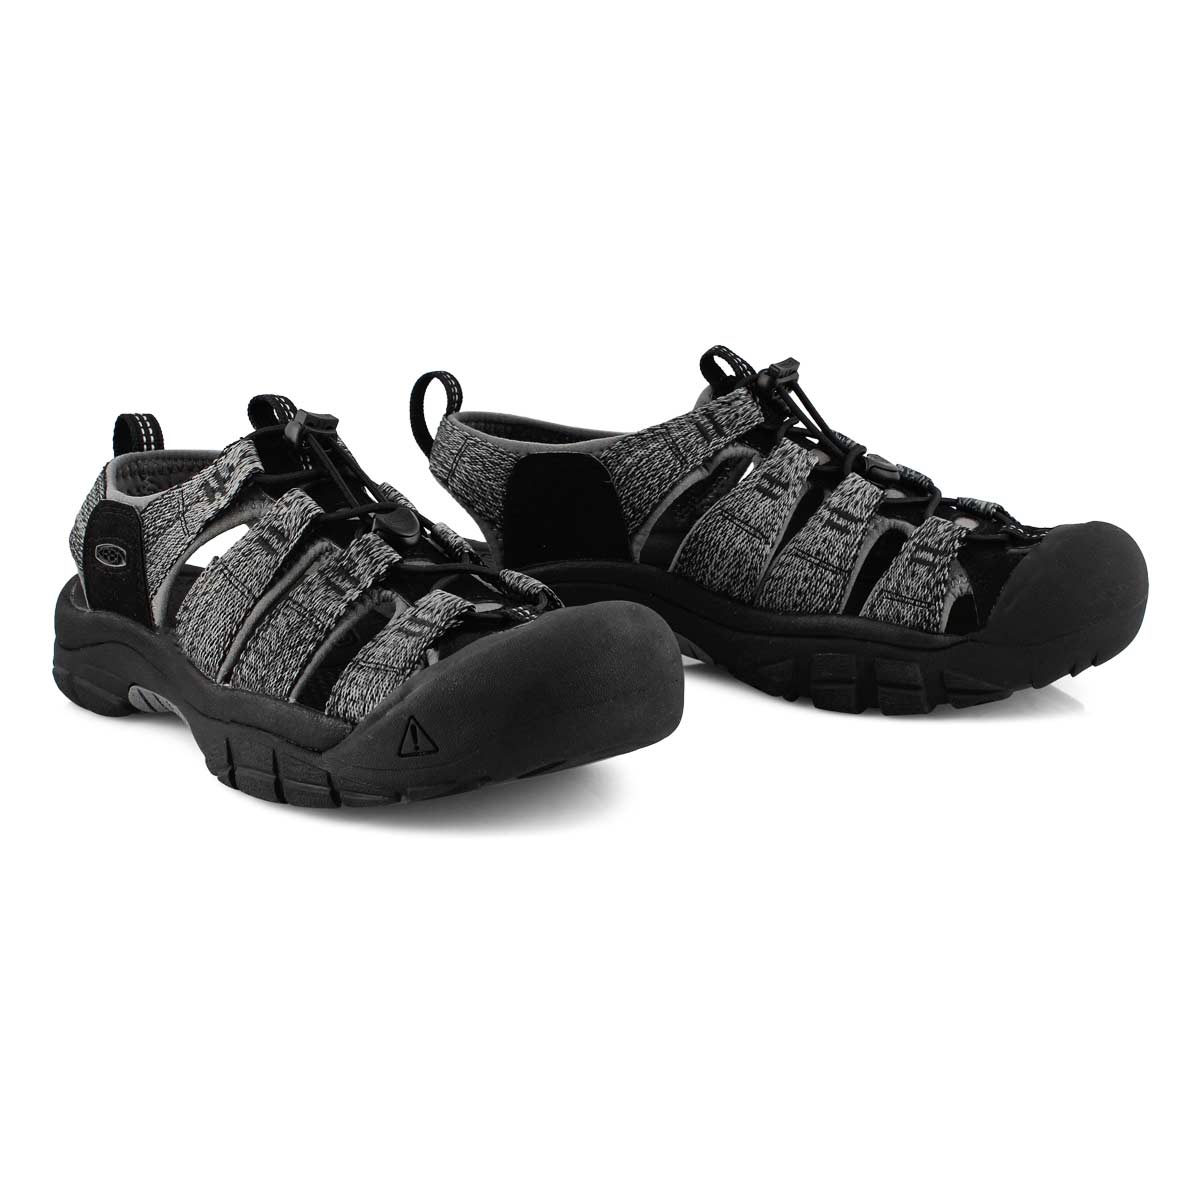 Men's Newport H2 Sport Sandal - Black/Steel